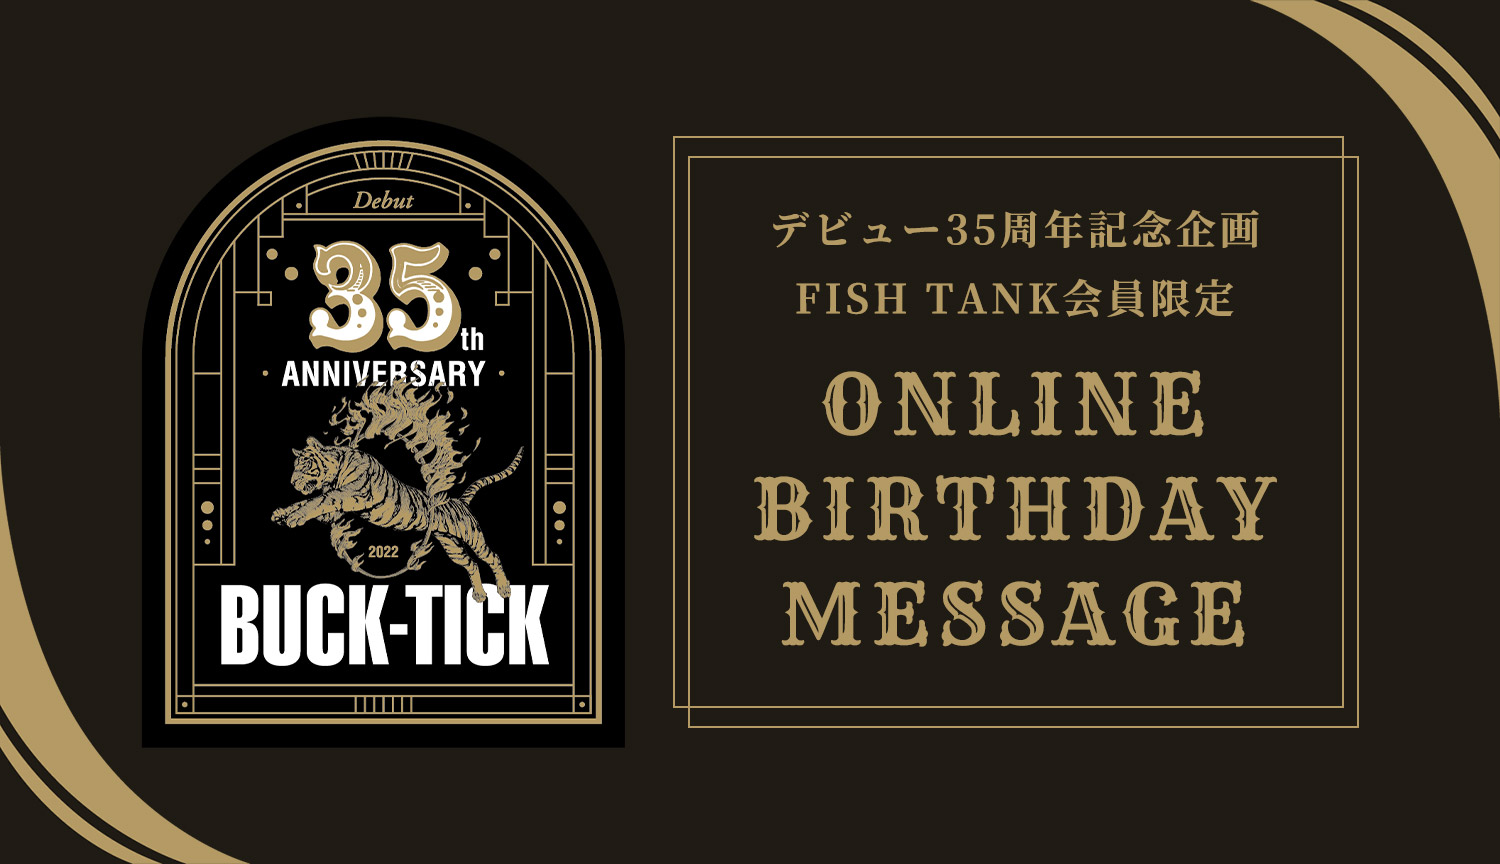 FISH TANK会員限定企画「ONLINE BIRTHDAY MESSAGE〜Yagami Toll〜」メッセージ公開！